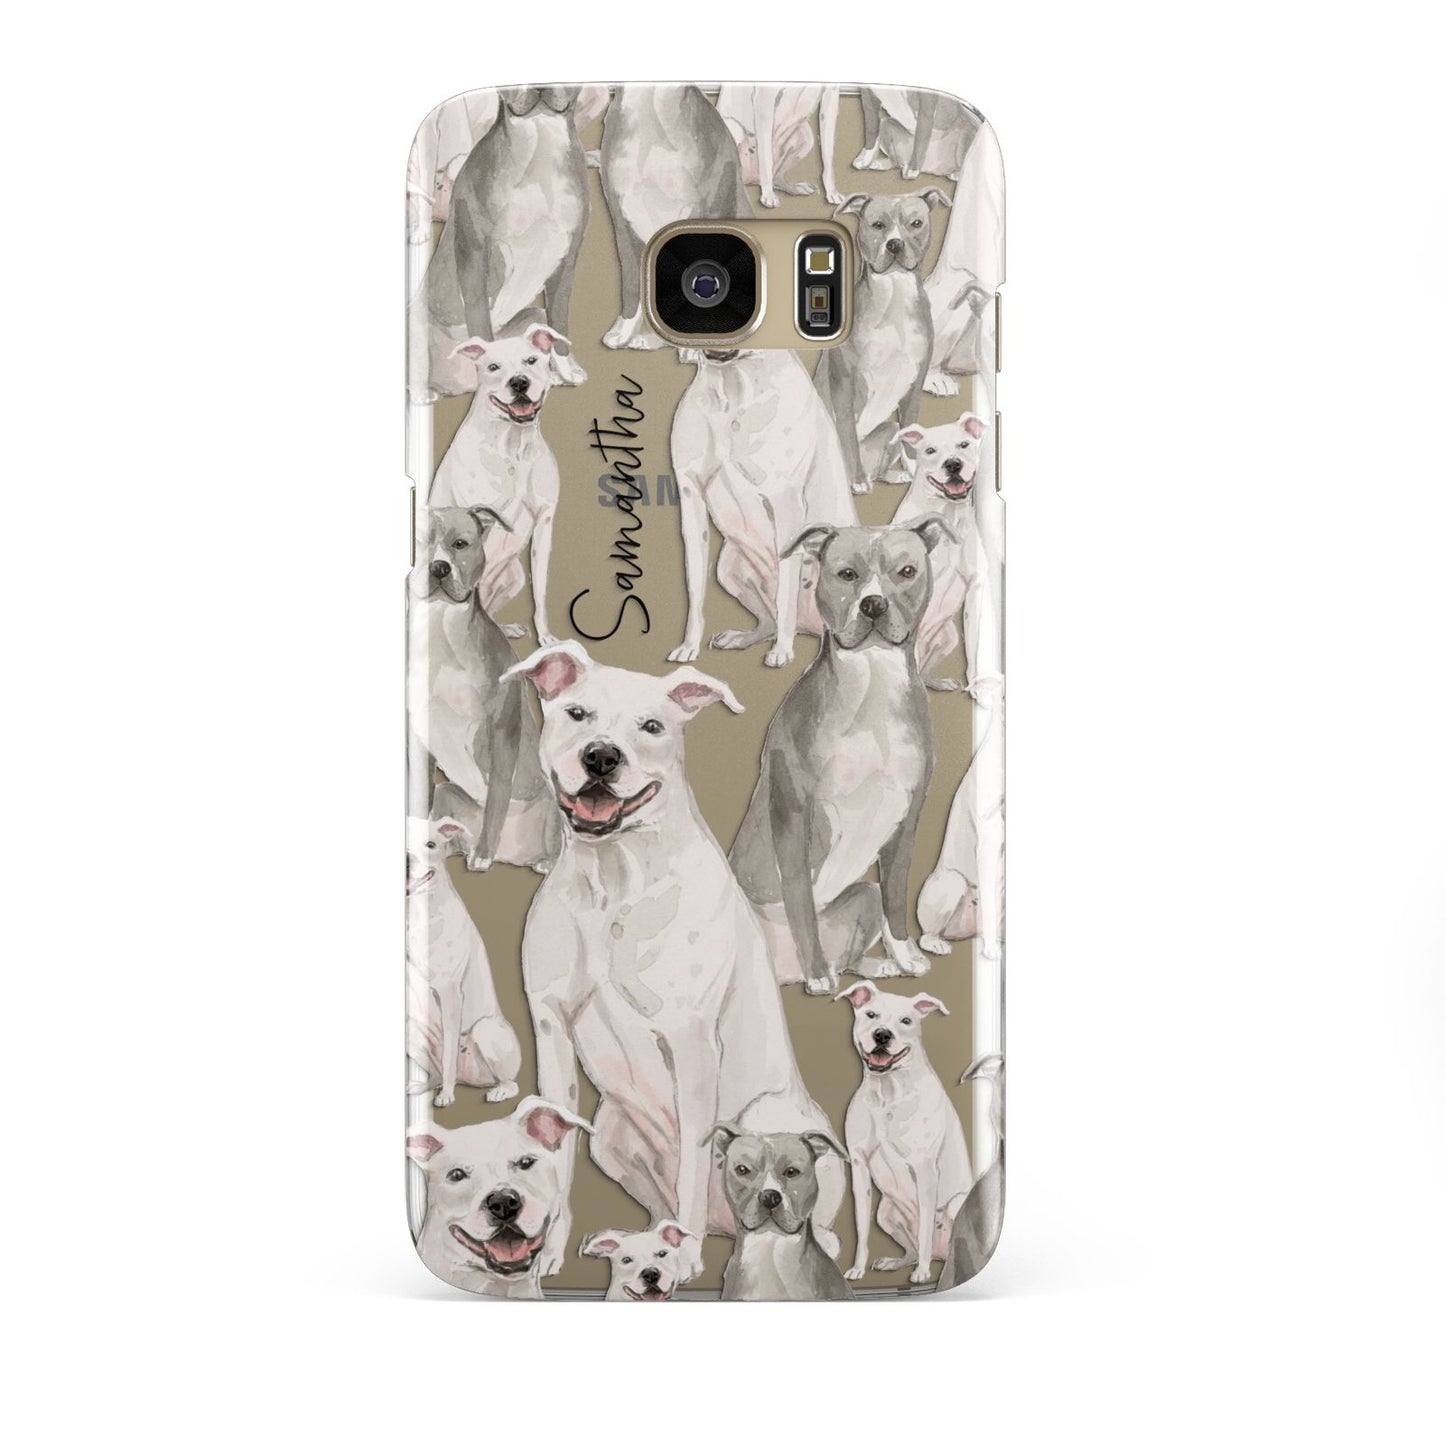 Personalised Staffordshire Dog Samsung Galaxy S7 Edge Case